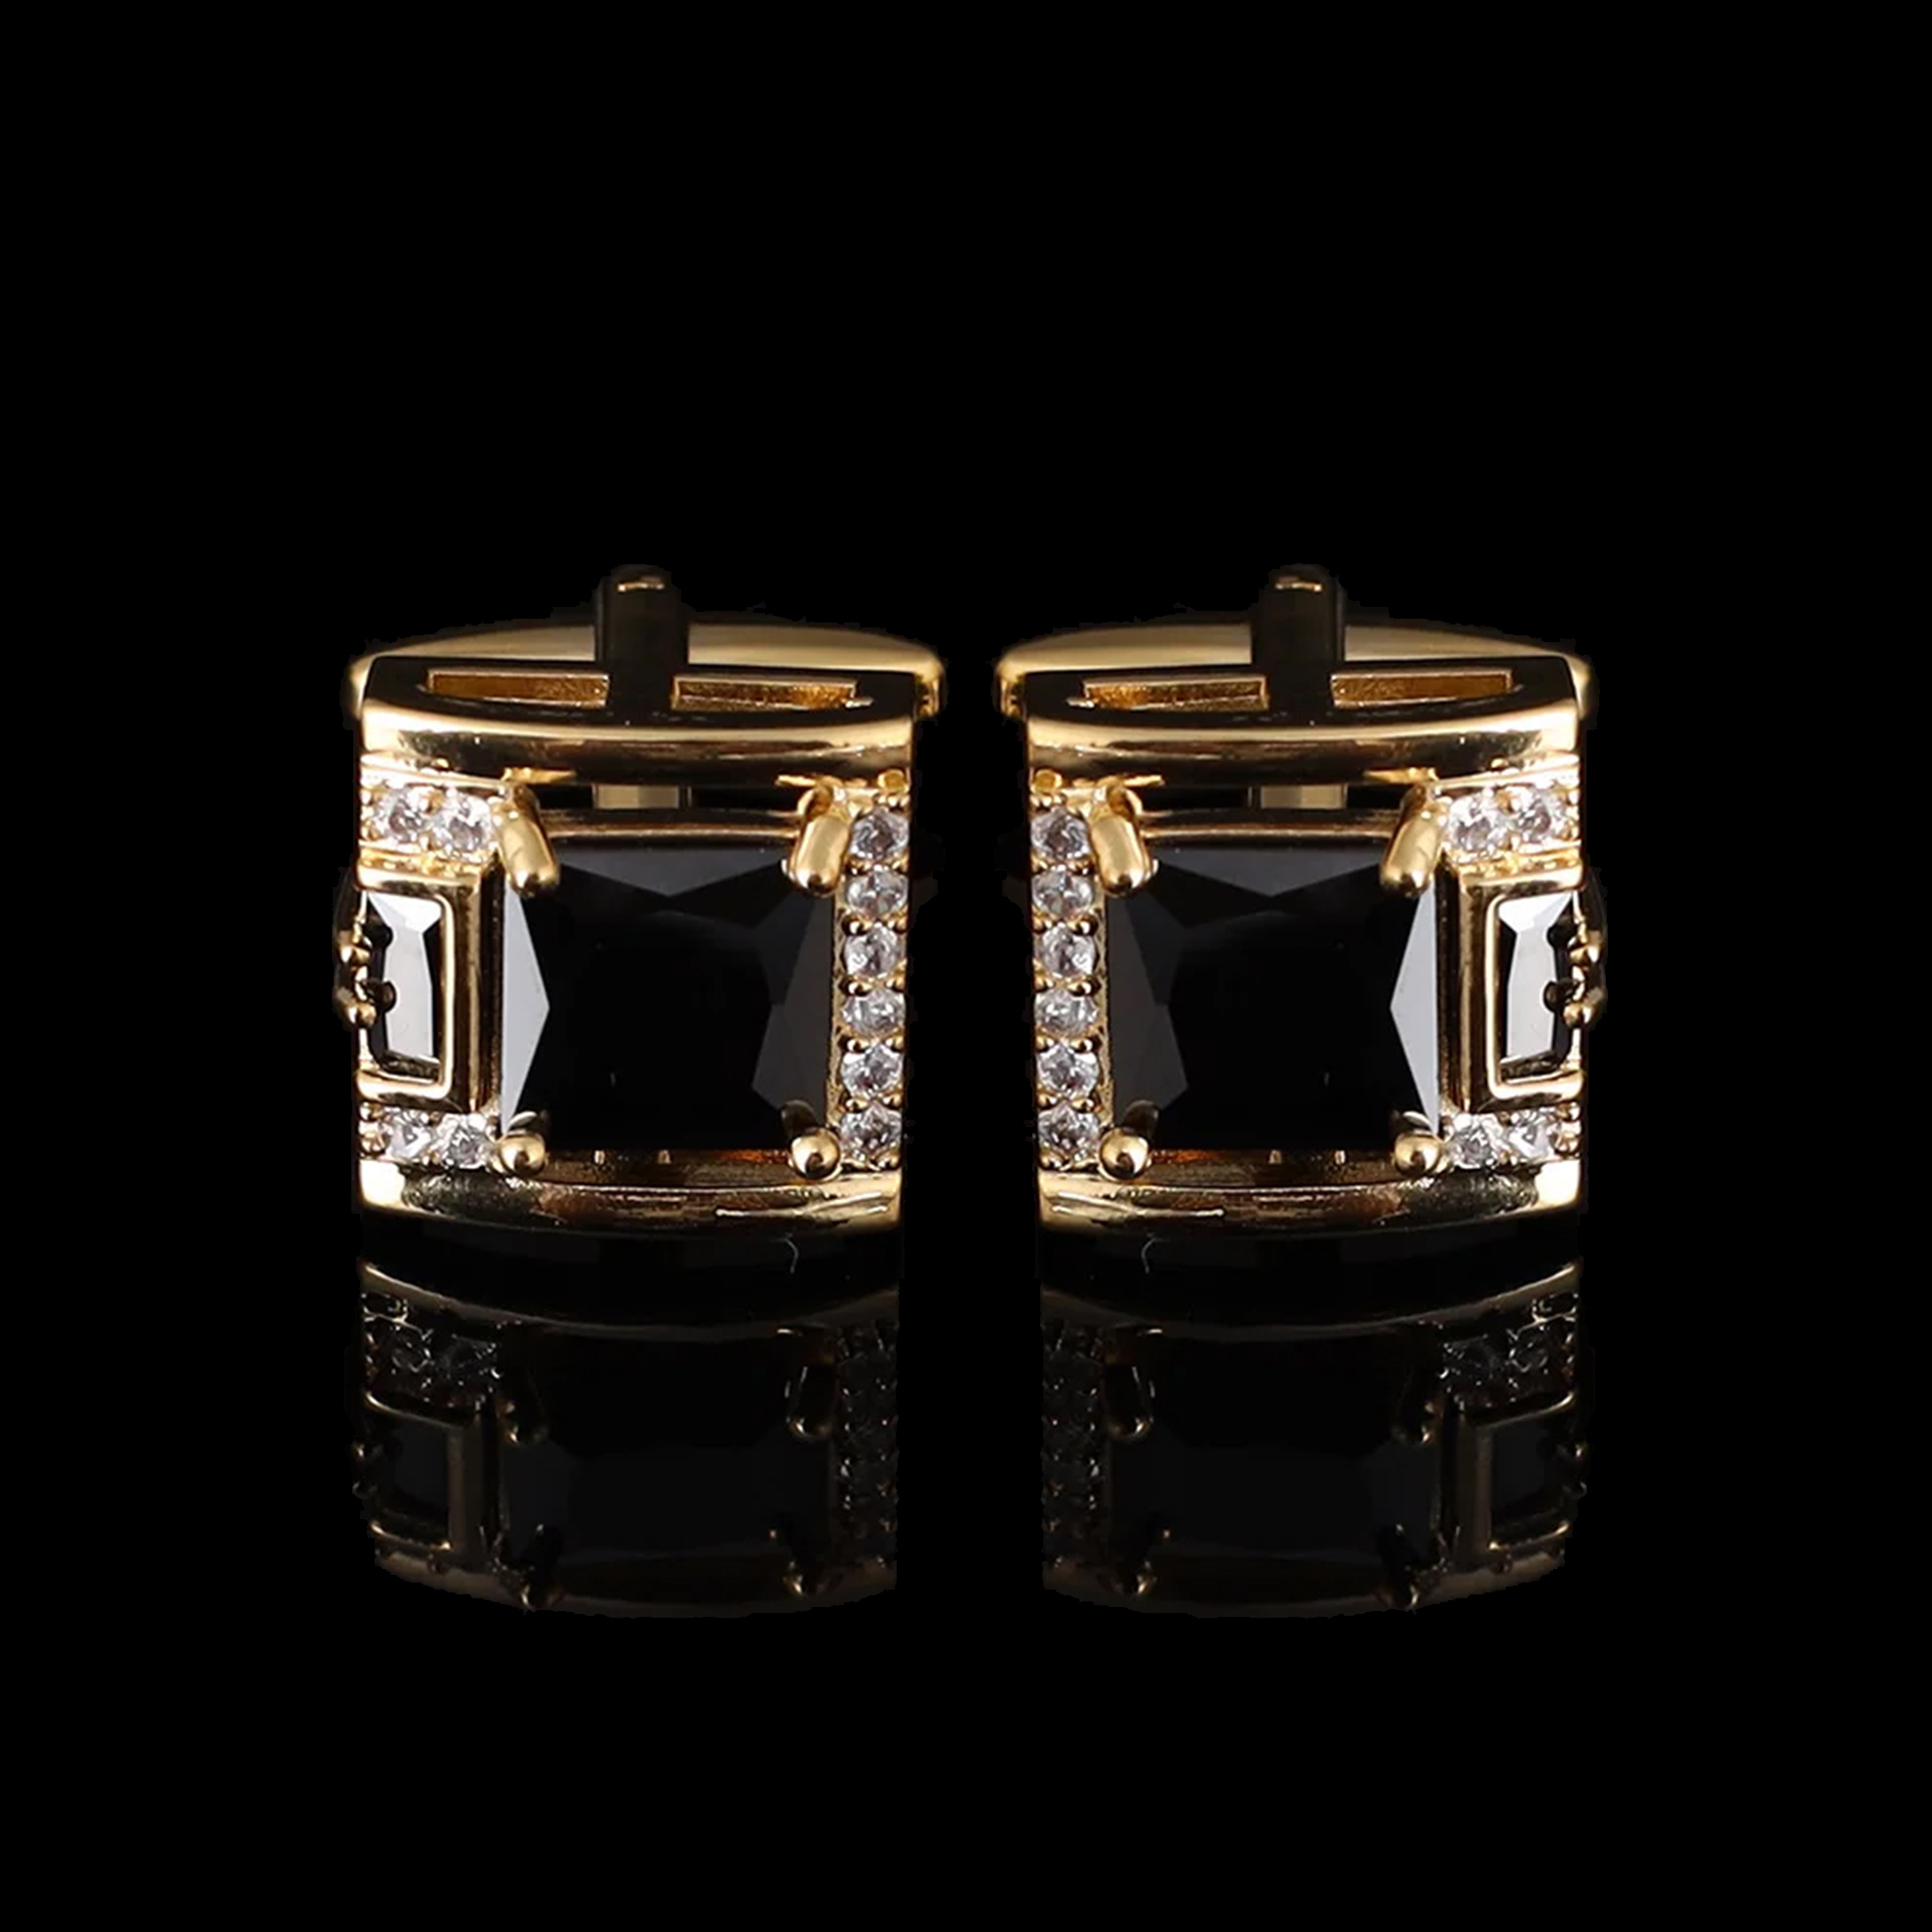 Cufflers Designer Black Tough Square Cufflinks Bold & Stylish Free Gift Box – CU-3015-A